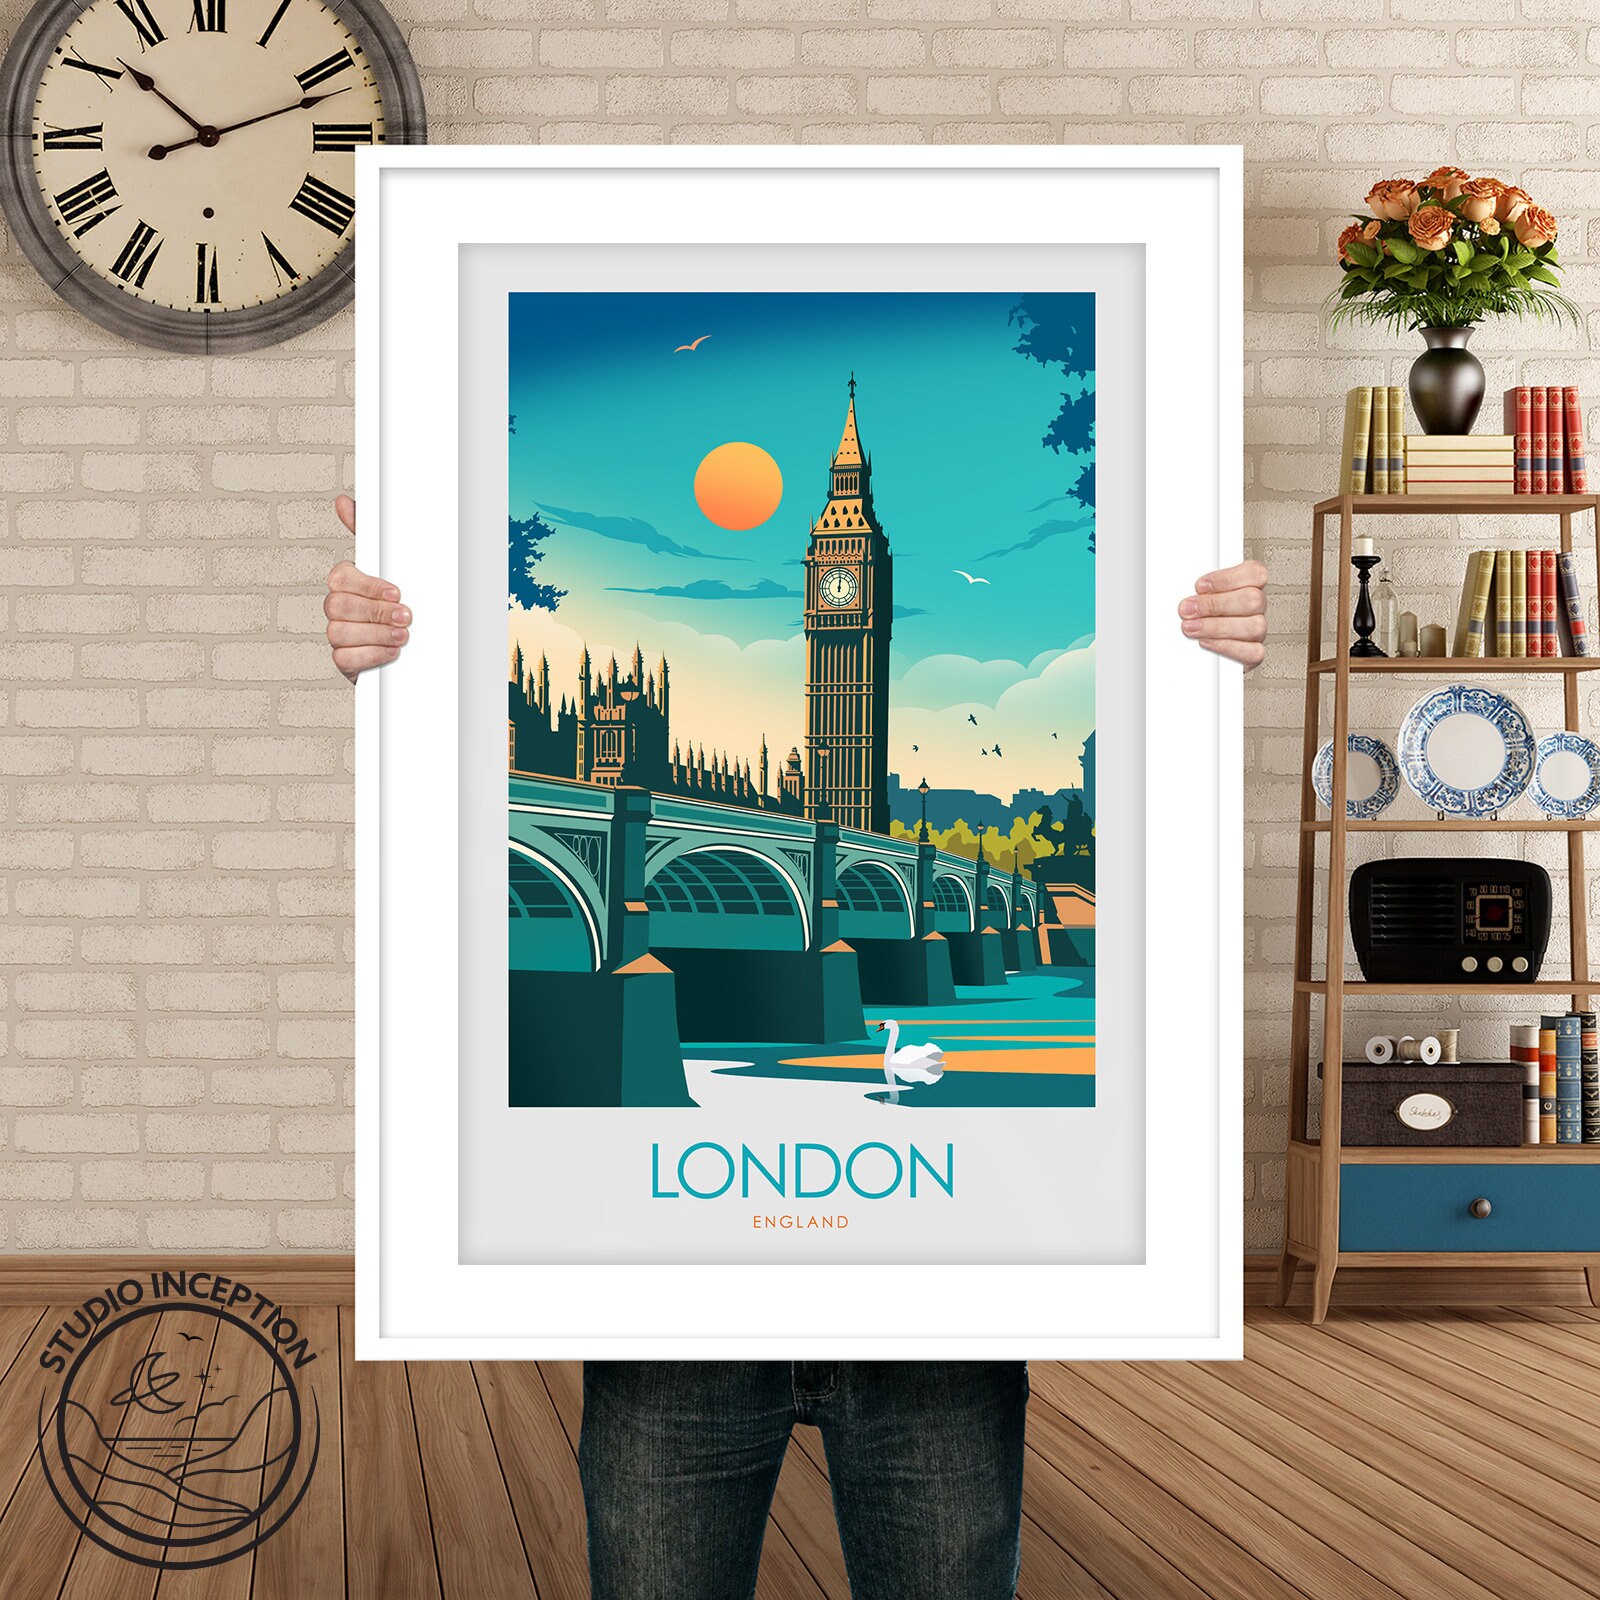 Discover London Print minimal style, London Poster, London Gifts, Big Ben, Travel Print, Travel Poster, Wedding gift, Birthday present. No Frame